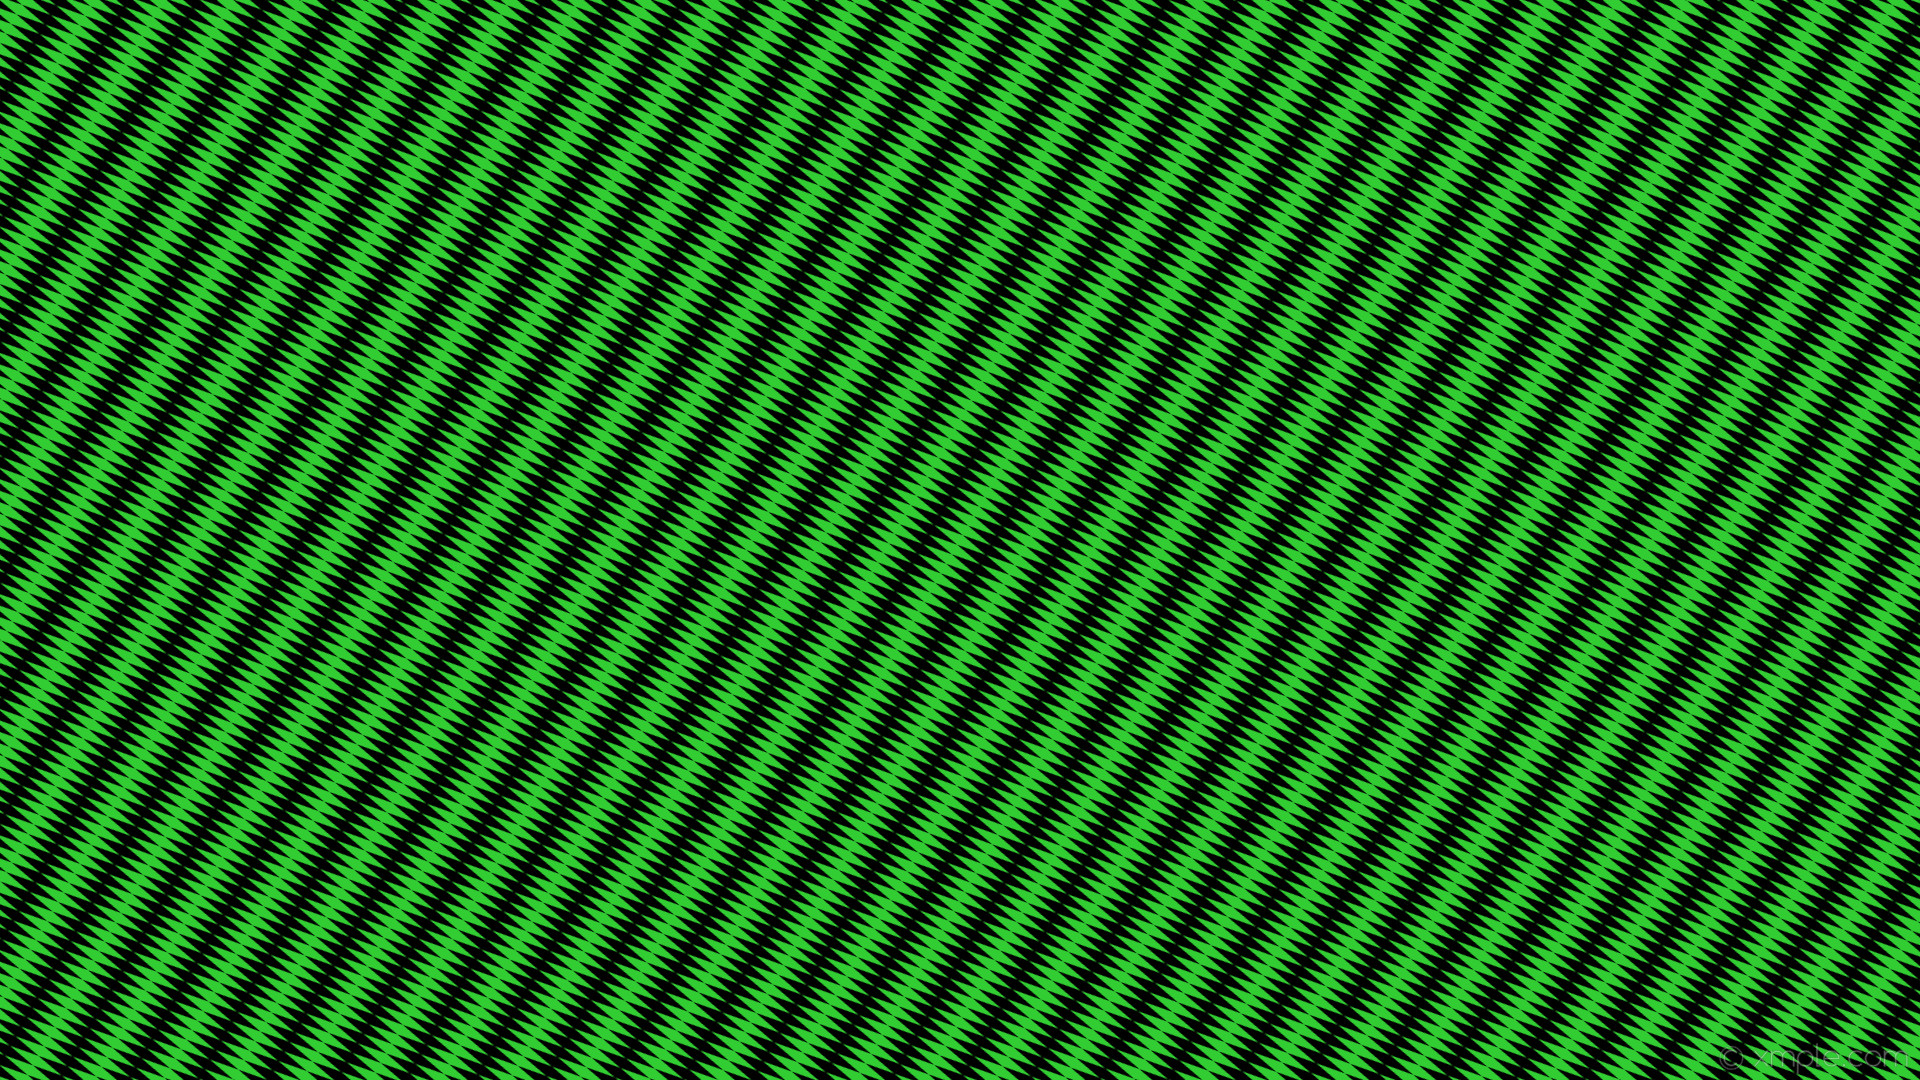 1920x1080 wallpaper lozenge green diamond black rhombus lime green #32cd32 #000000  150Â° 60px 11px